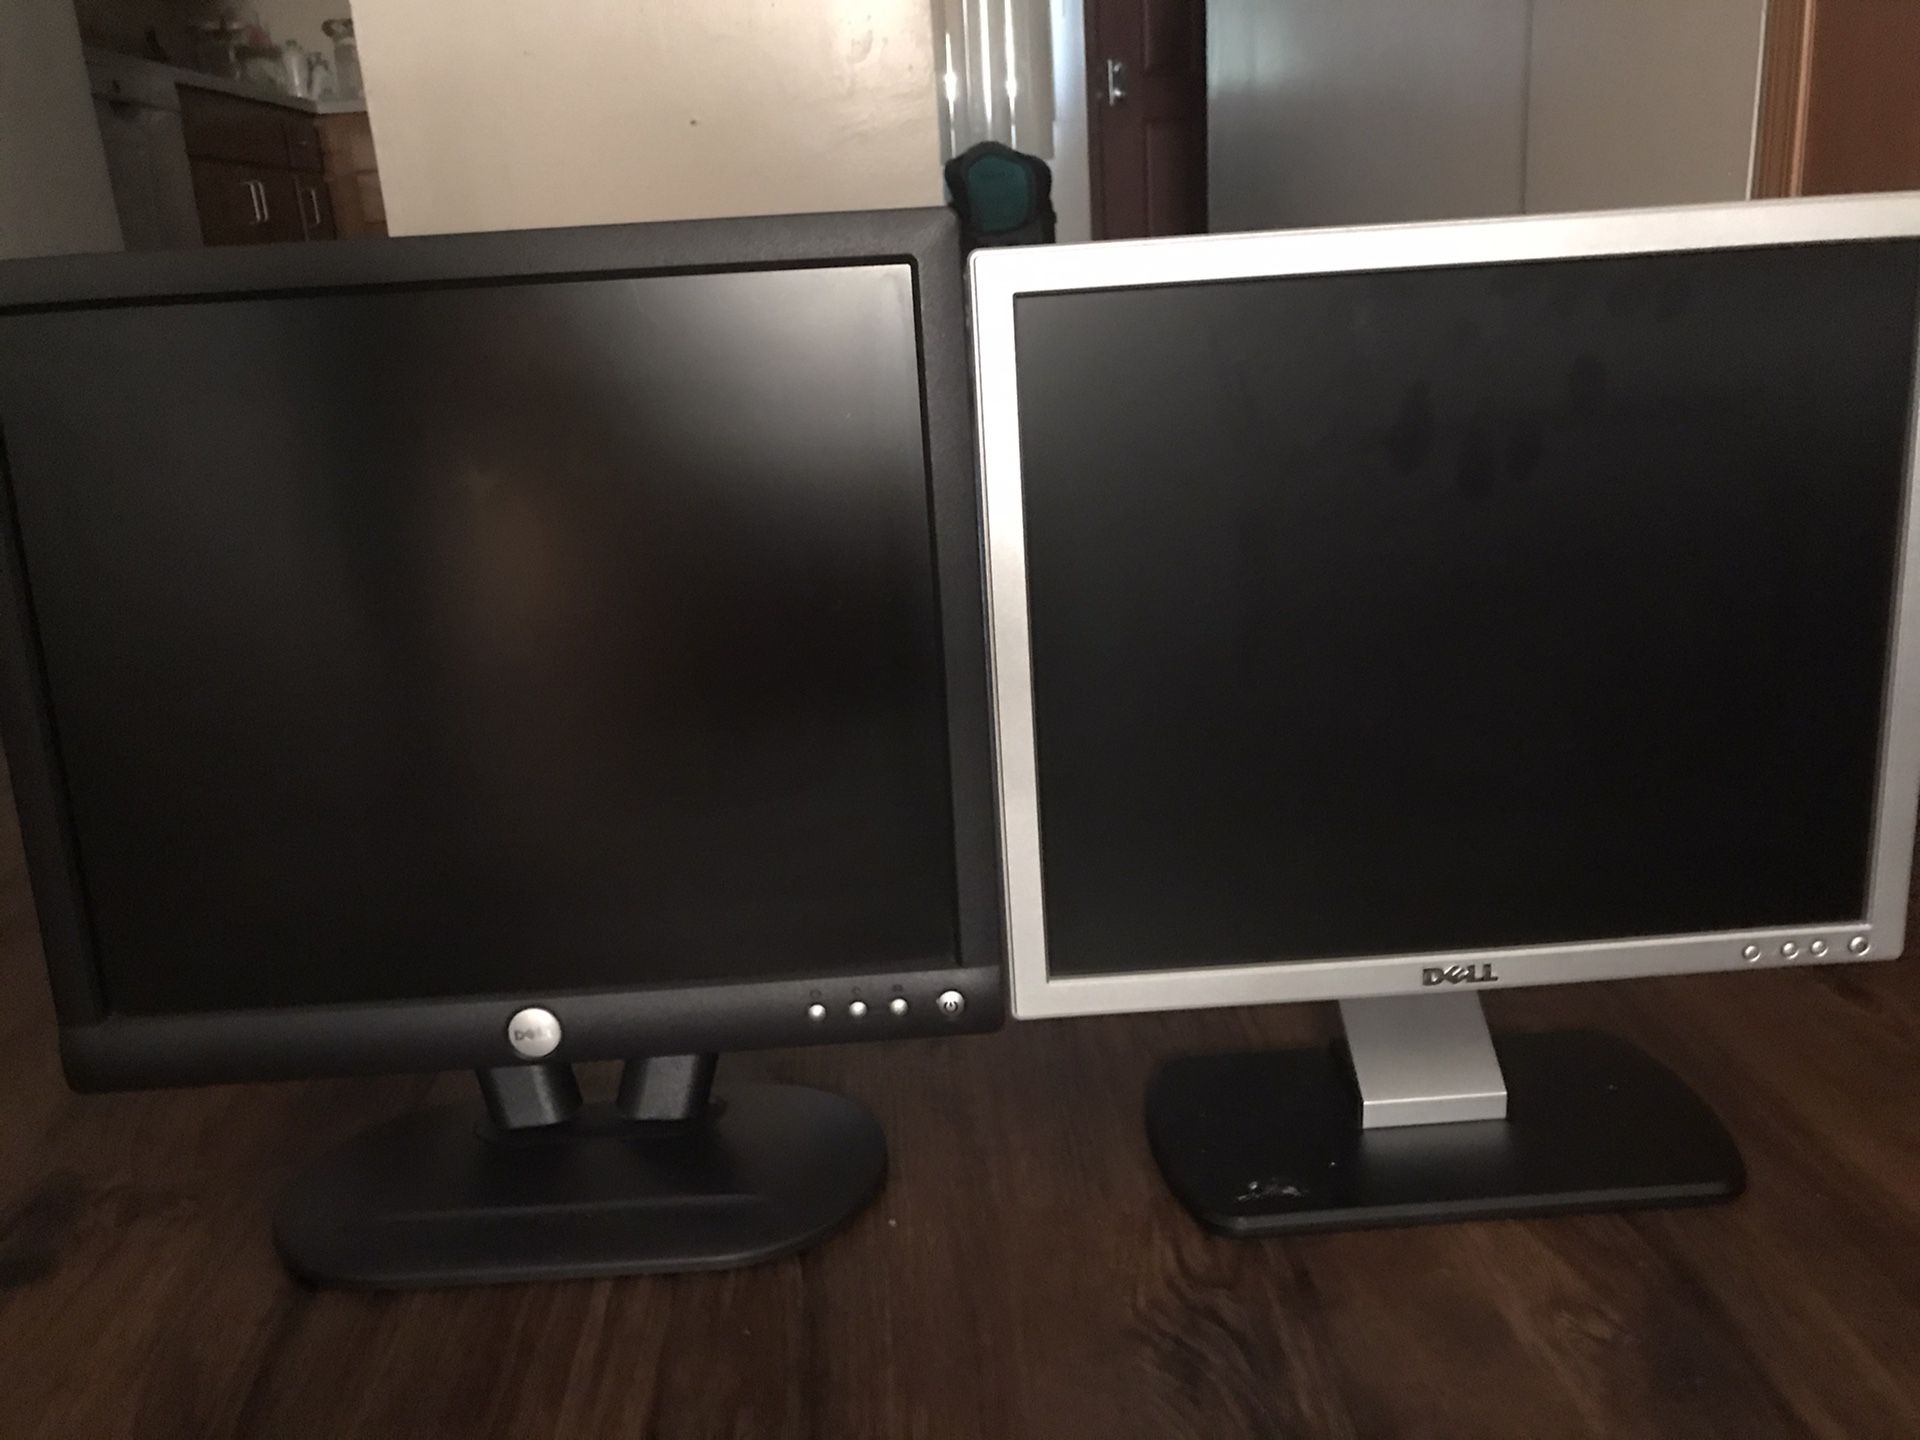 FREE! Two dell computer monitors.